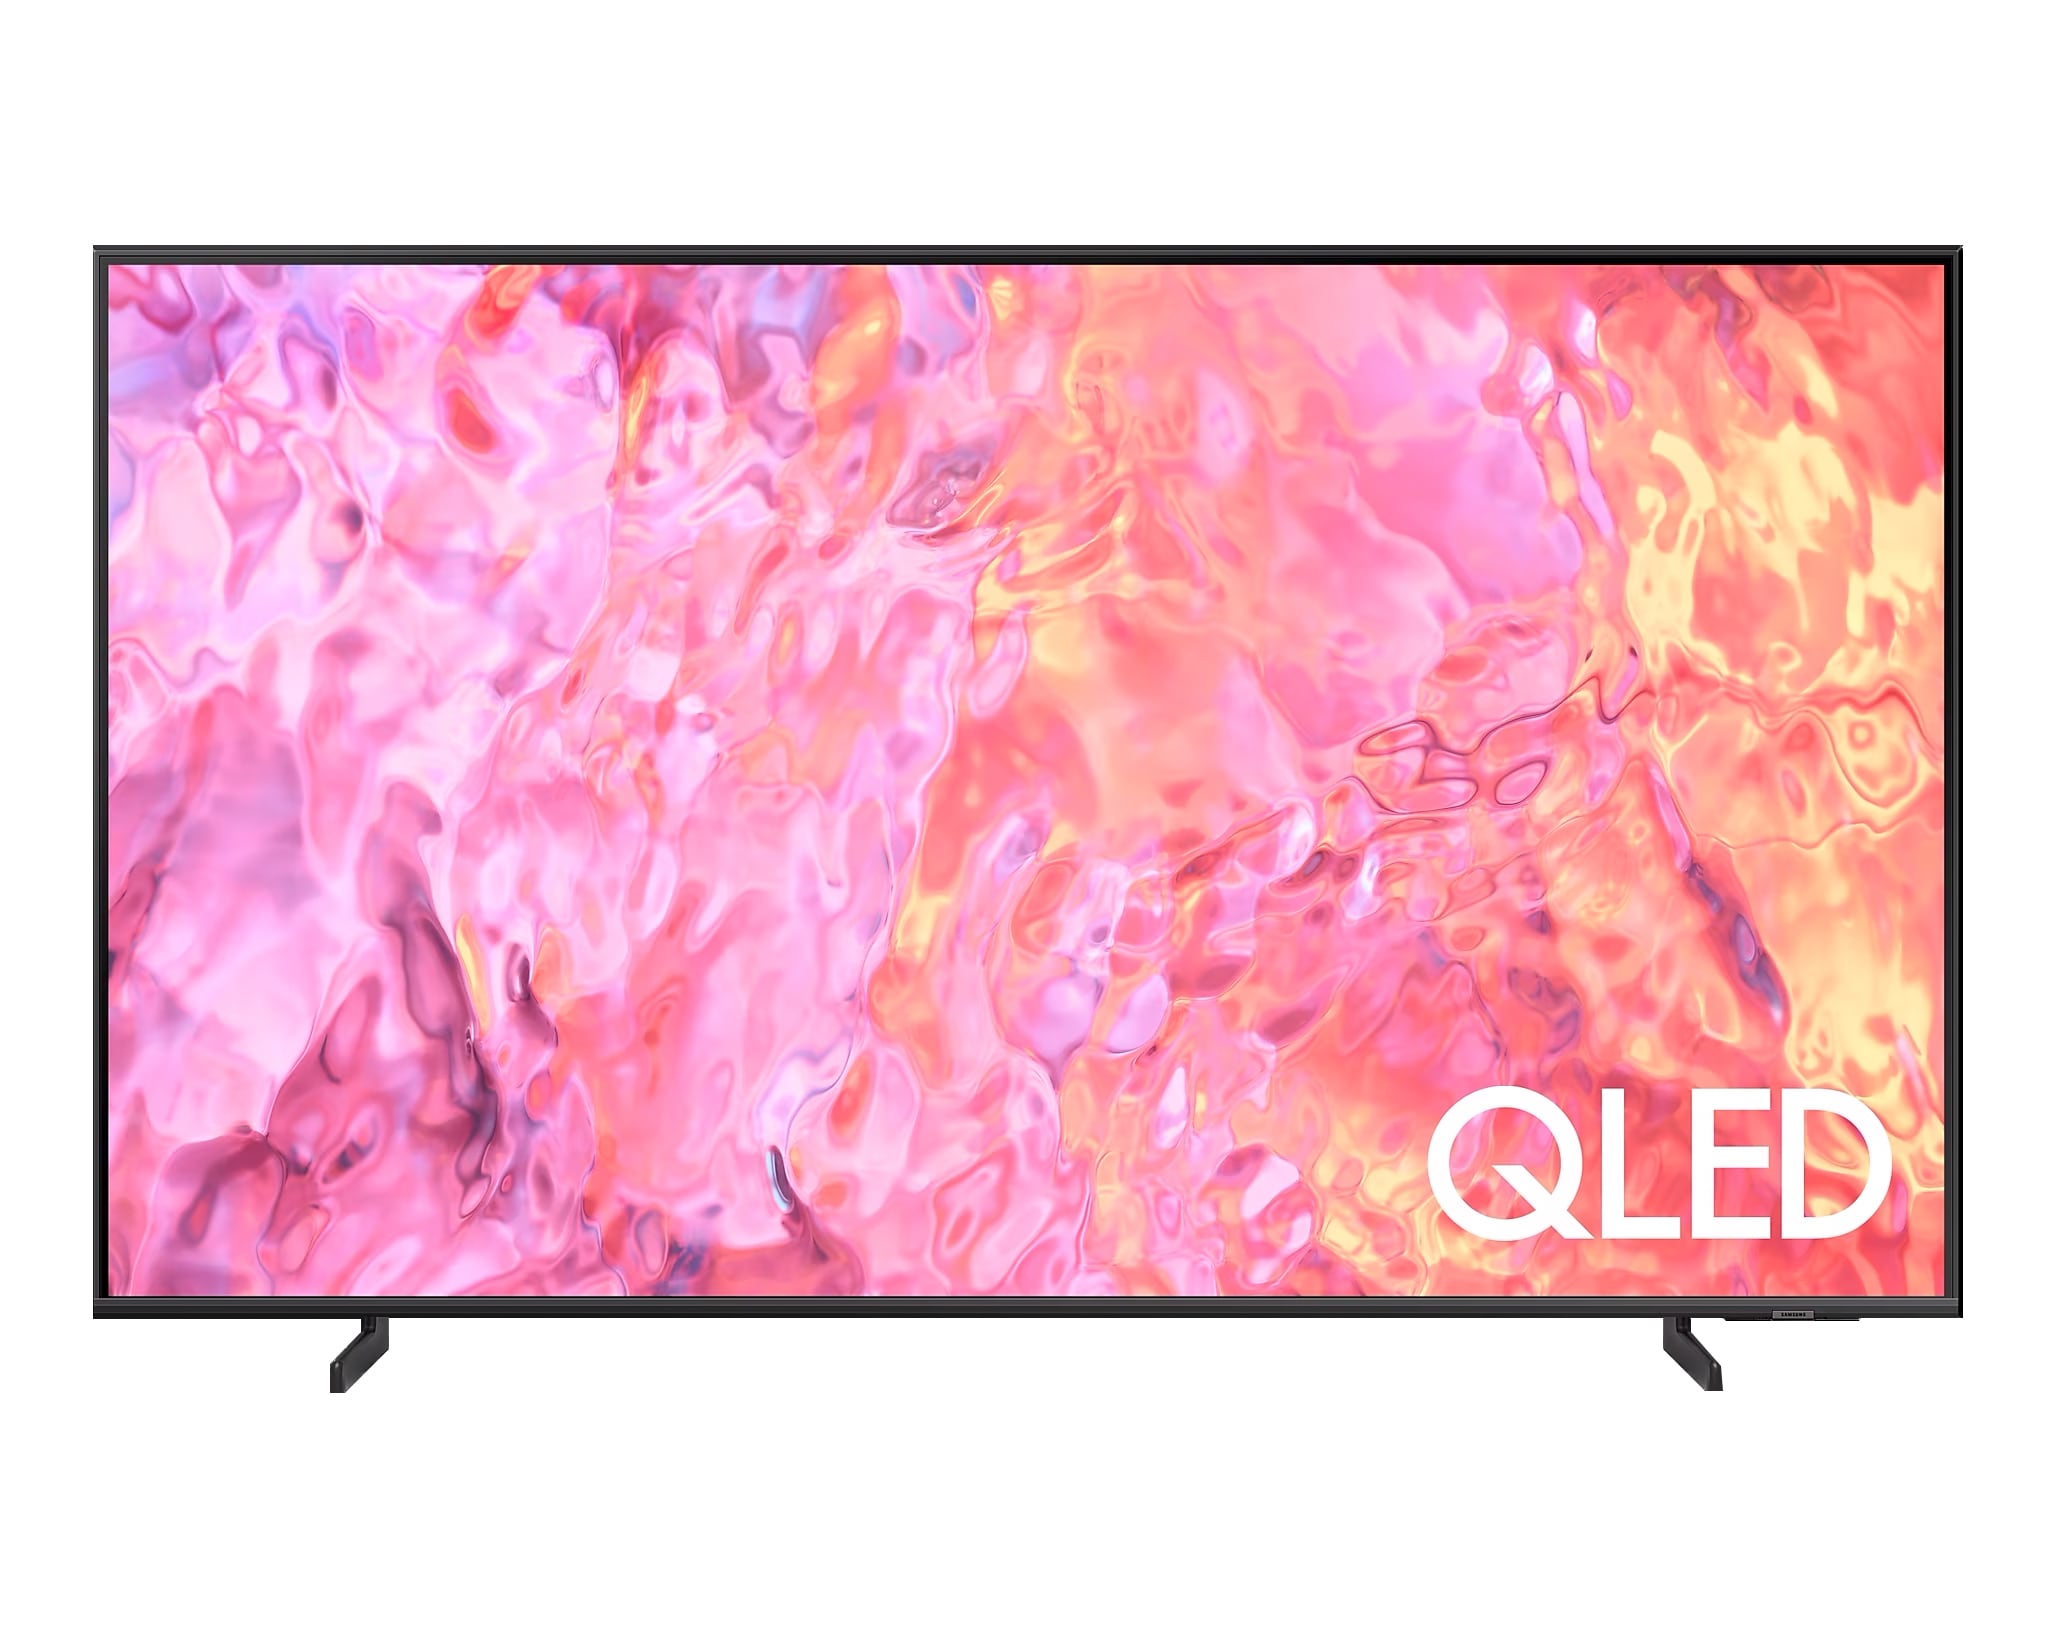 Samsung Q60C QLED 4K Smart TV (55-inch)